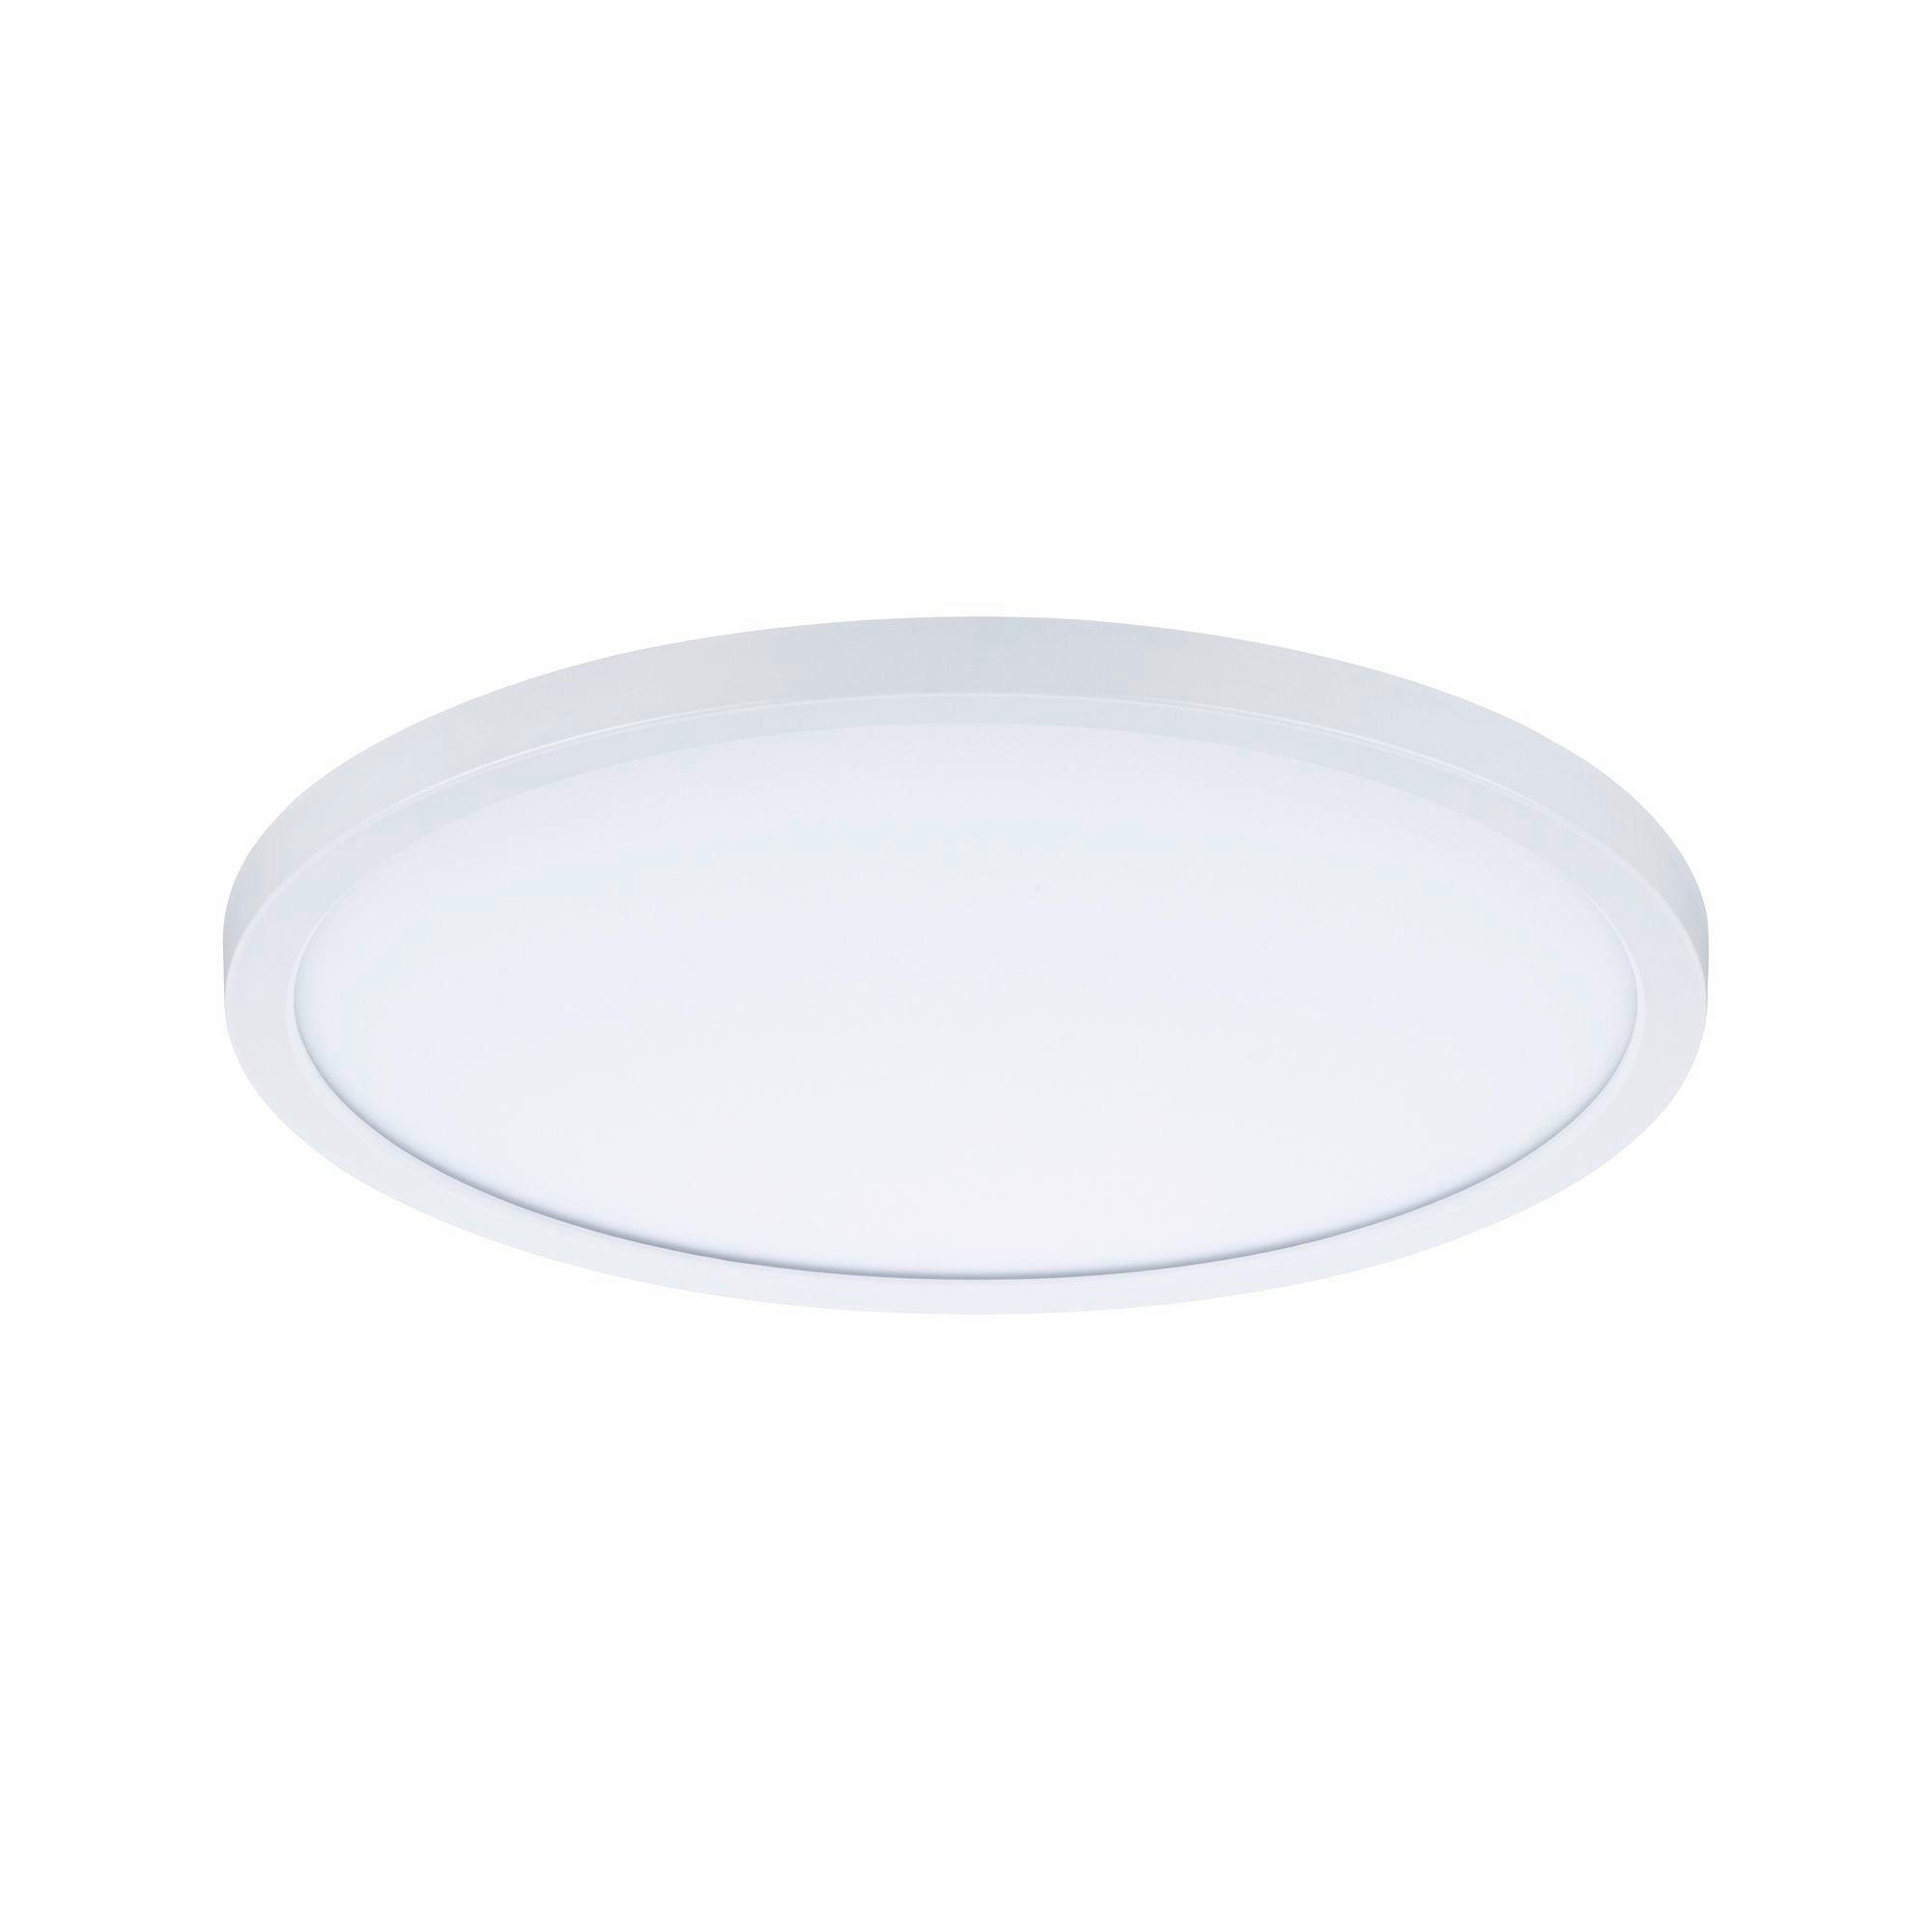 LED-PANEEL  - Weiß, Design, Kunststoff (23,0cm) - Paulmann